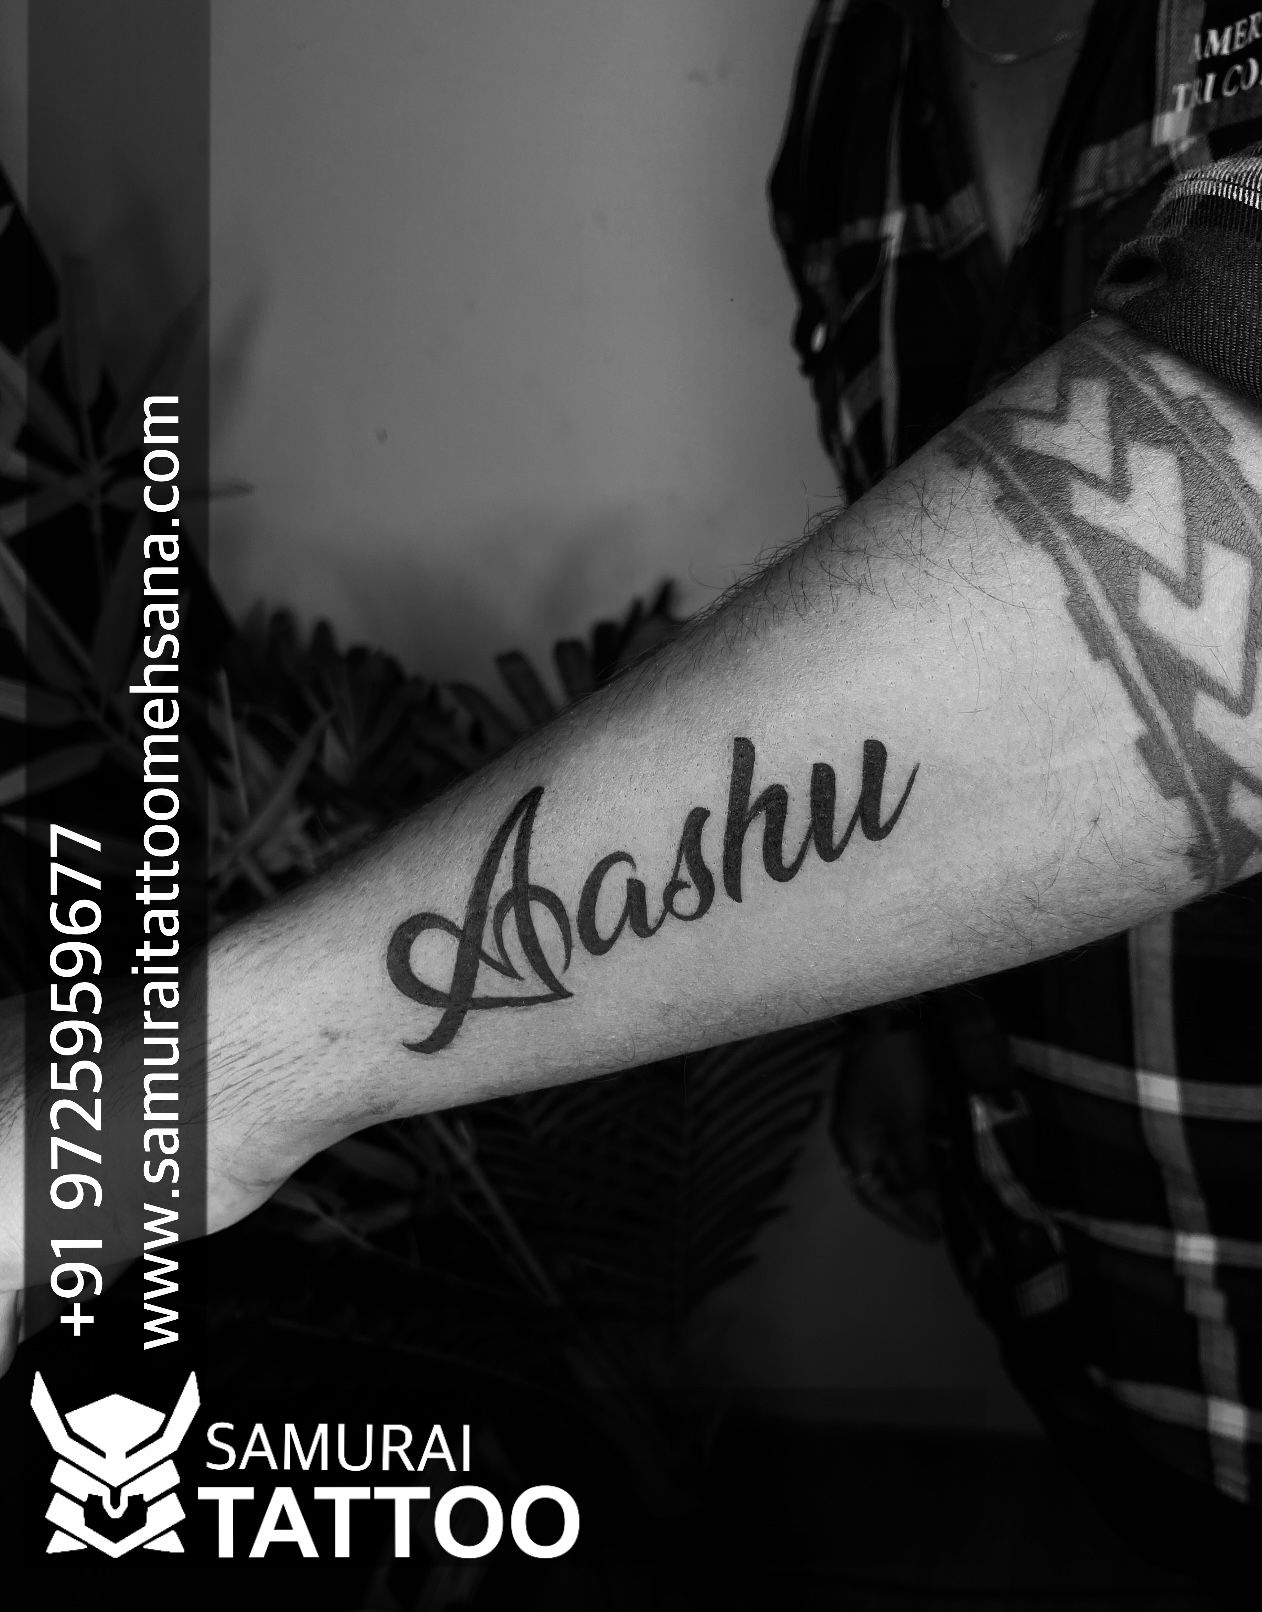 Tattoo uploaded by Vipul Chaudhary  Ashu name tattoo Ashu tattoo Ashu  name tattoo ideas ashu tattoo ideas  Tattoodo